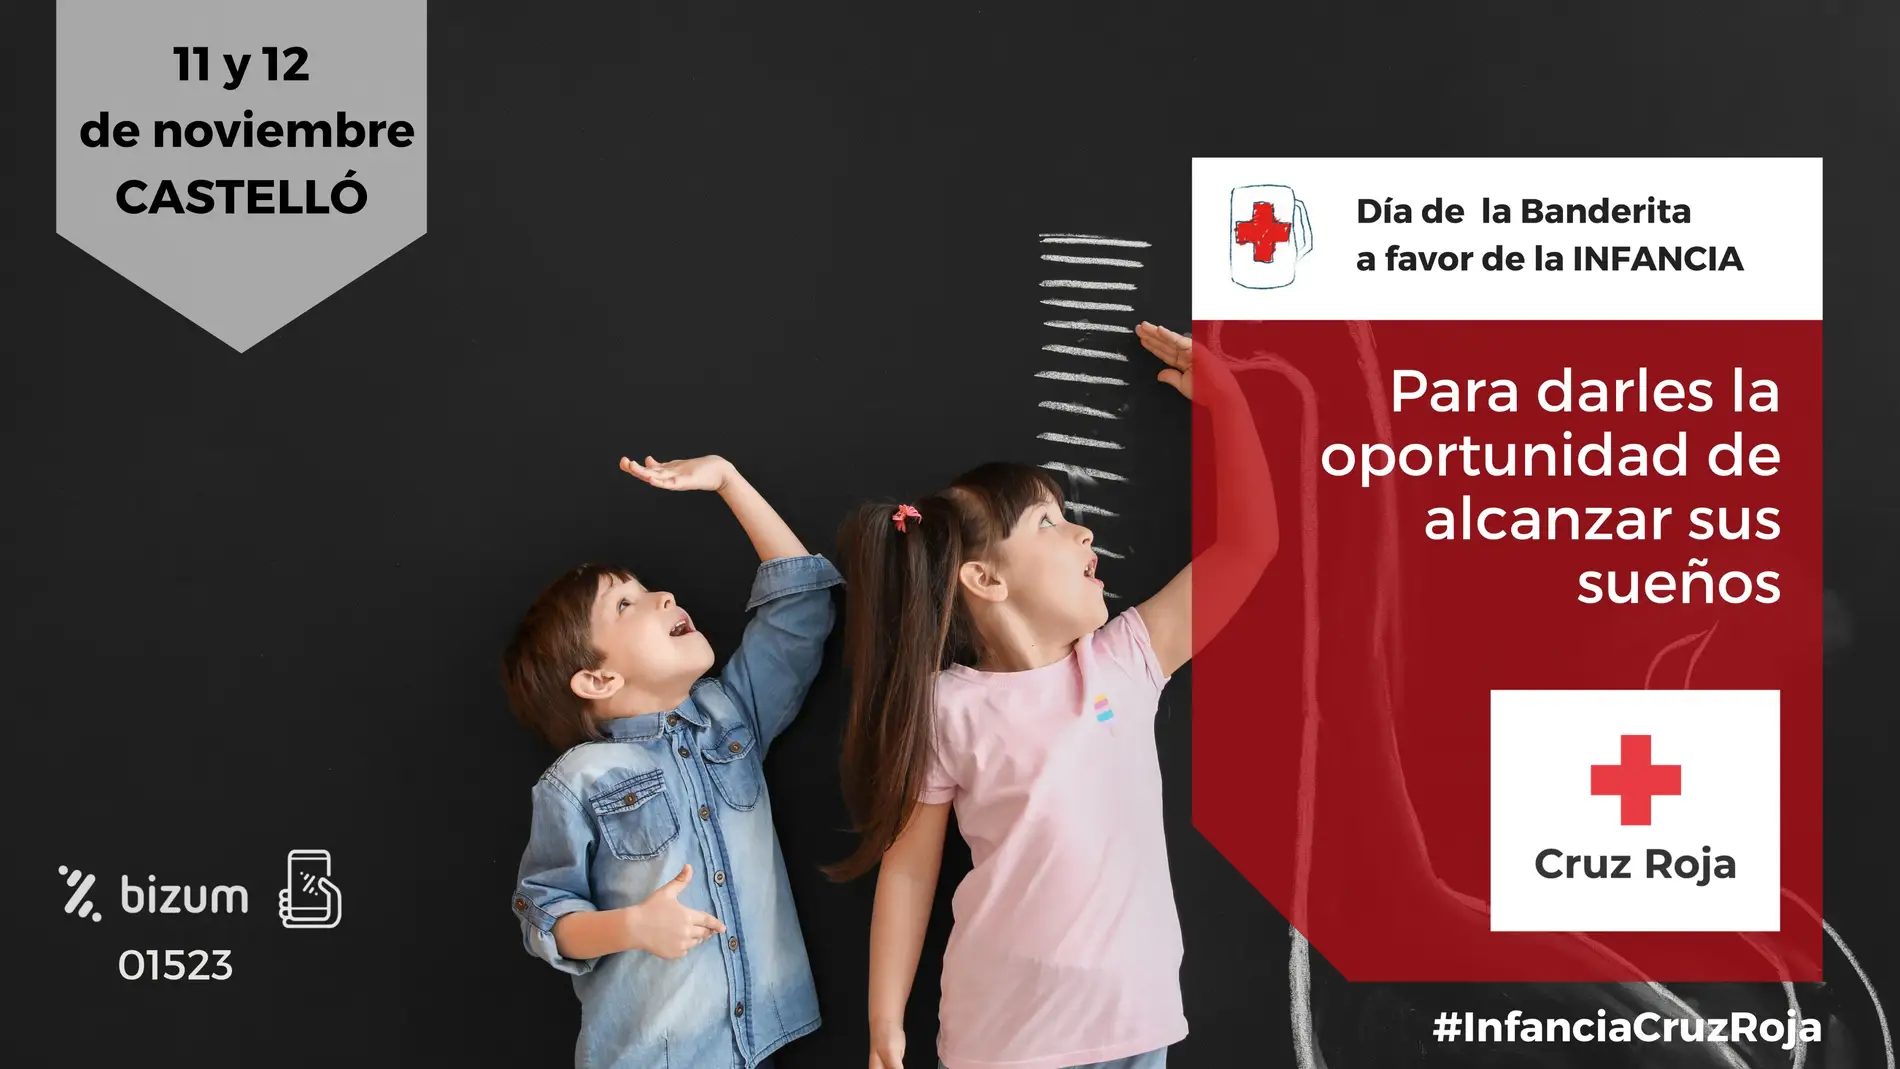  Cruz Roja en Castelló celebra su tradicional banderita solidaria a favor de la infancia 